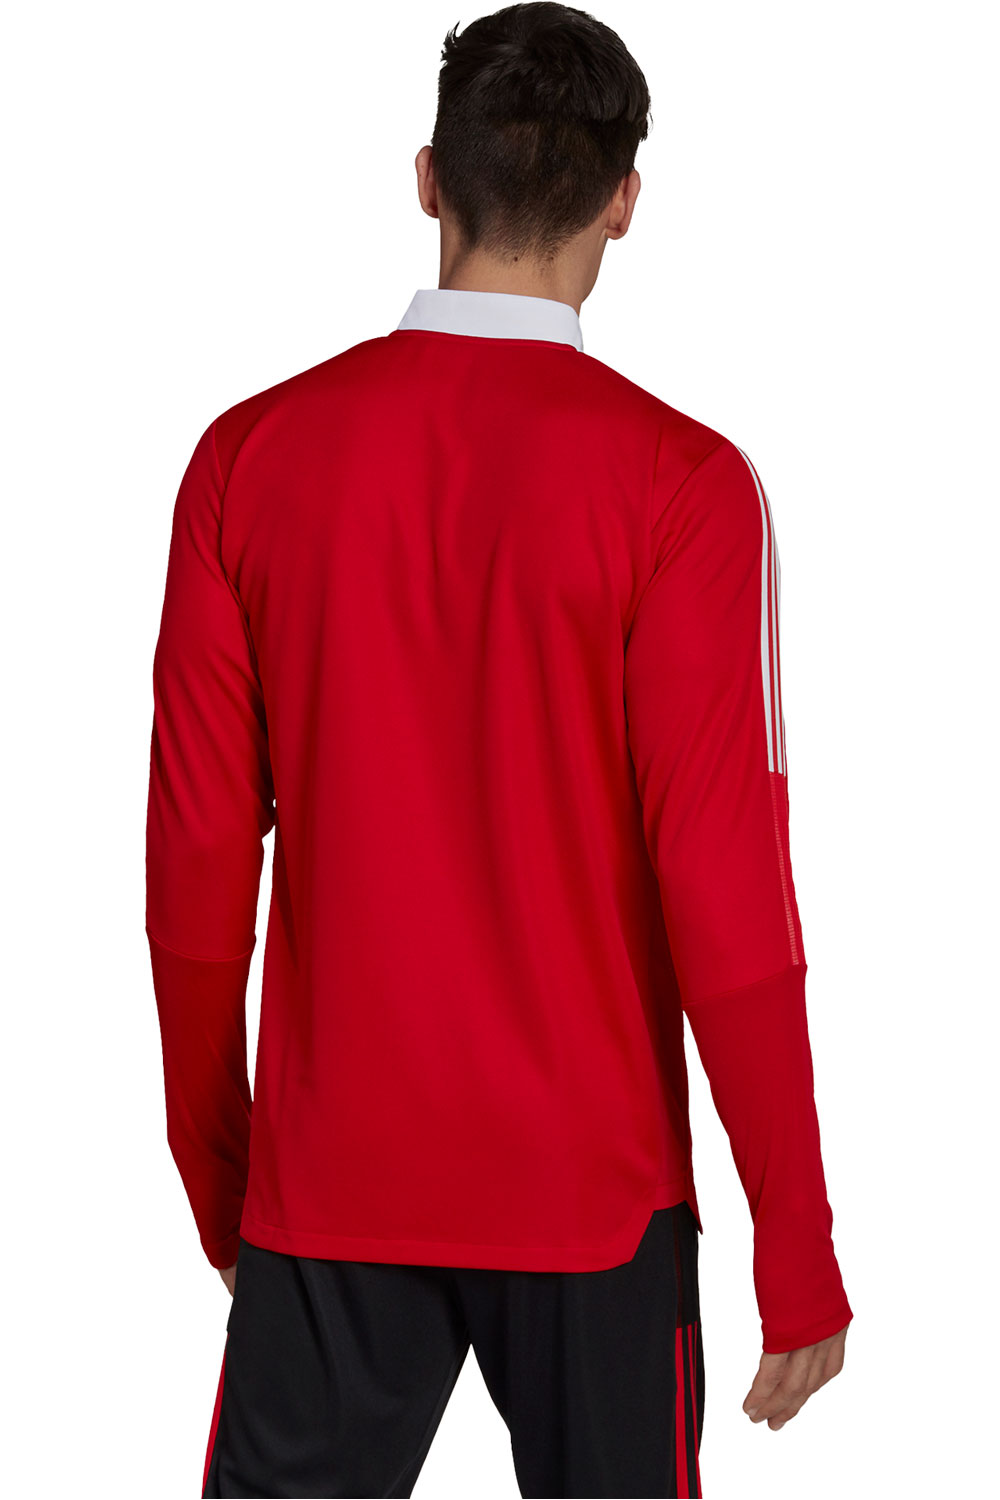 Camisetas fútbol manga larga hombre red bull n.y 22 tr top